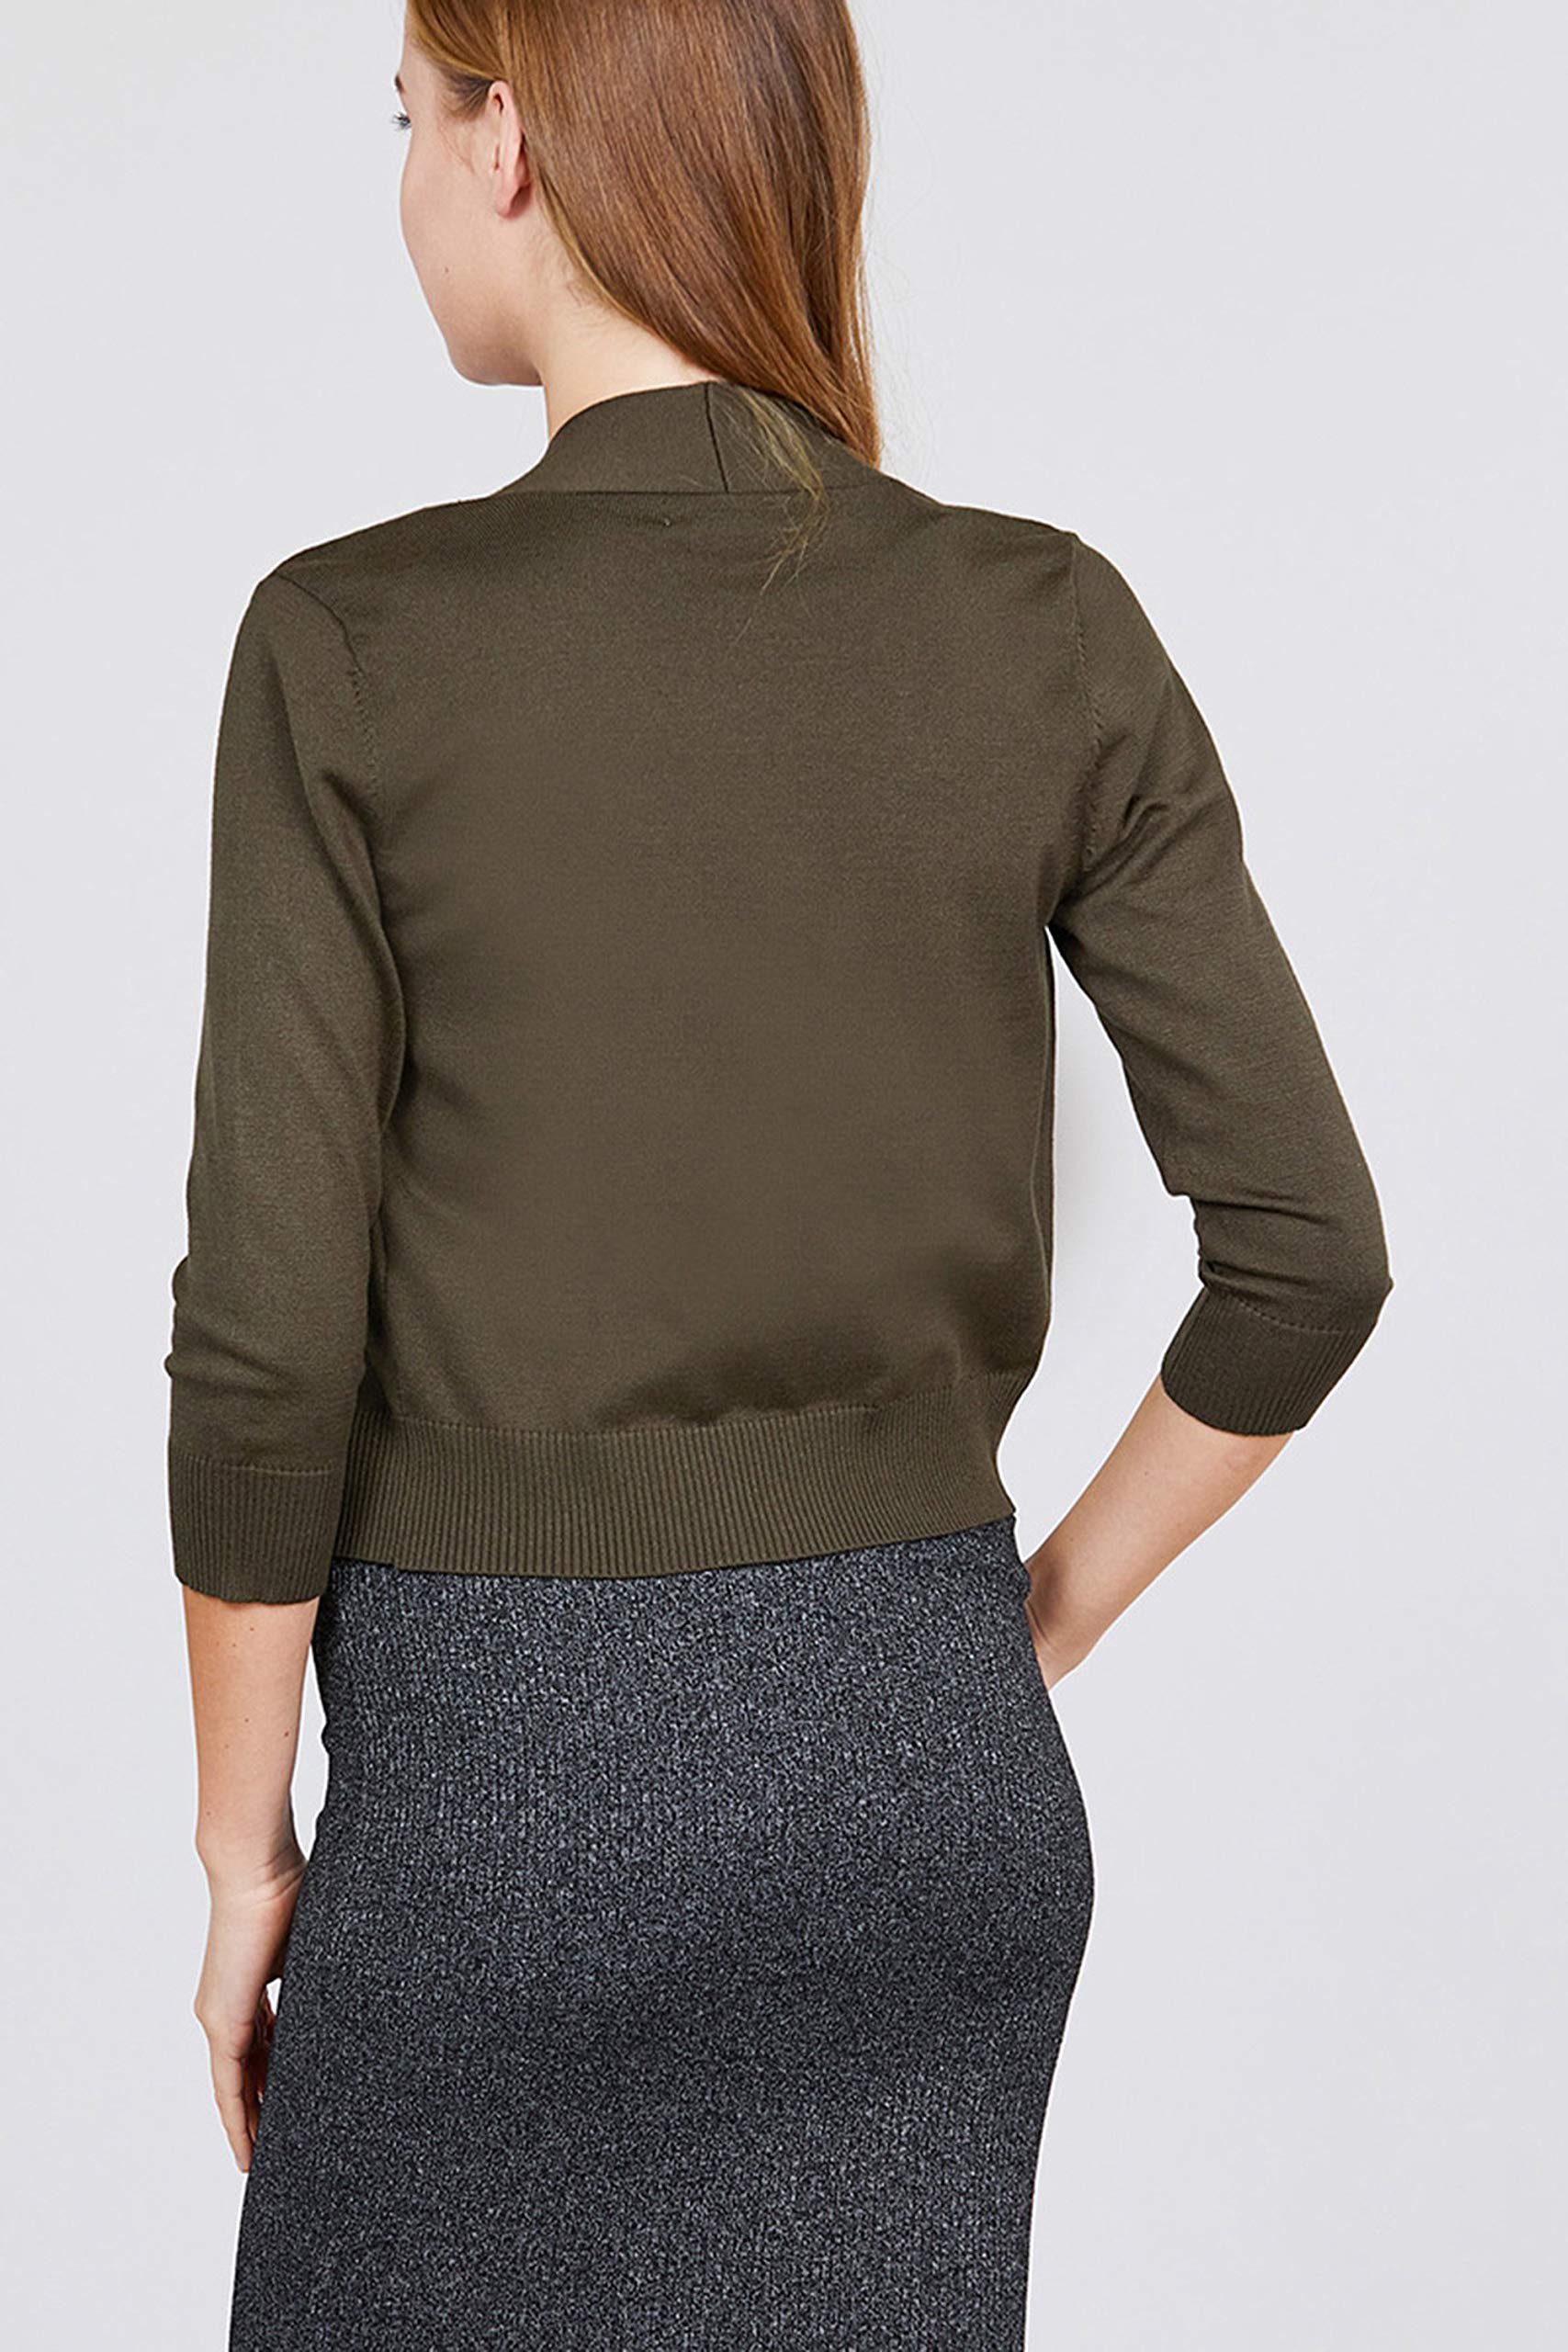 Women's Basic 3/4 Sleeve Open Front Crop Light Weight Sweater Cardigan